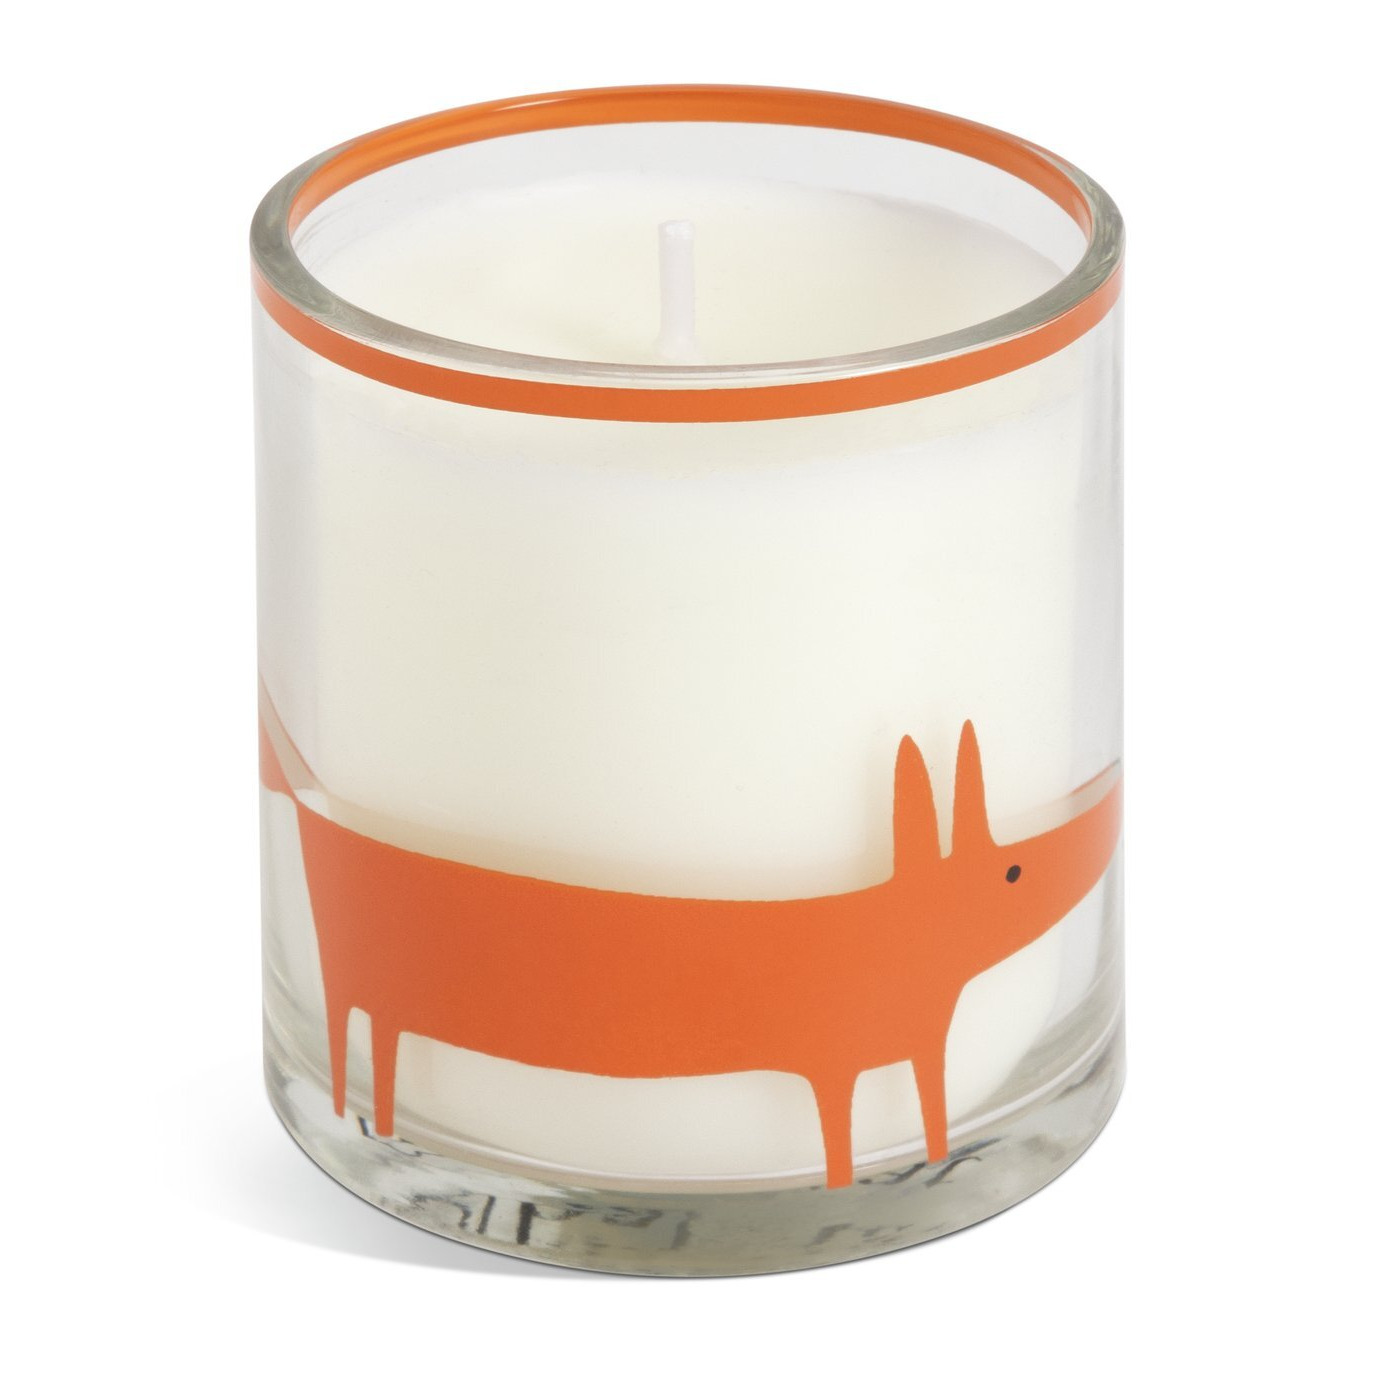 Habitat x Scion Mr Fox Glass Candle - Paradise Plum & Orchid - image 1